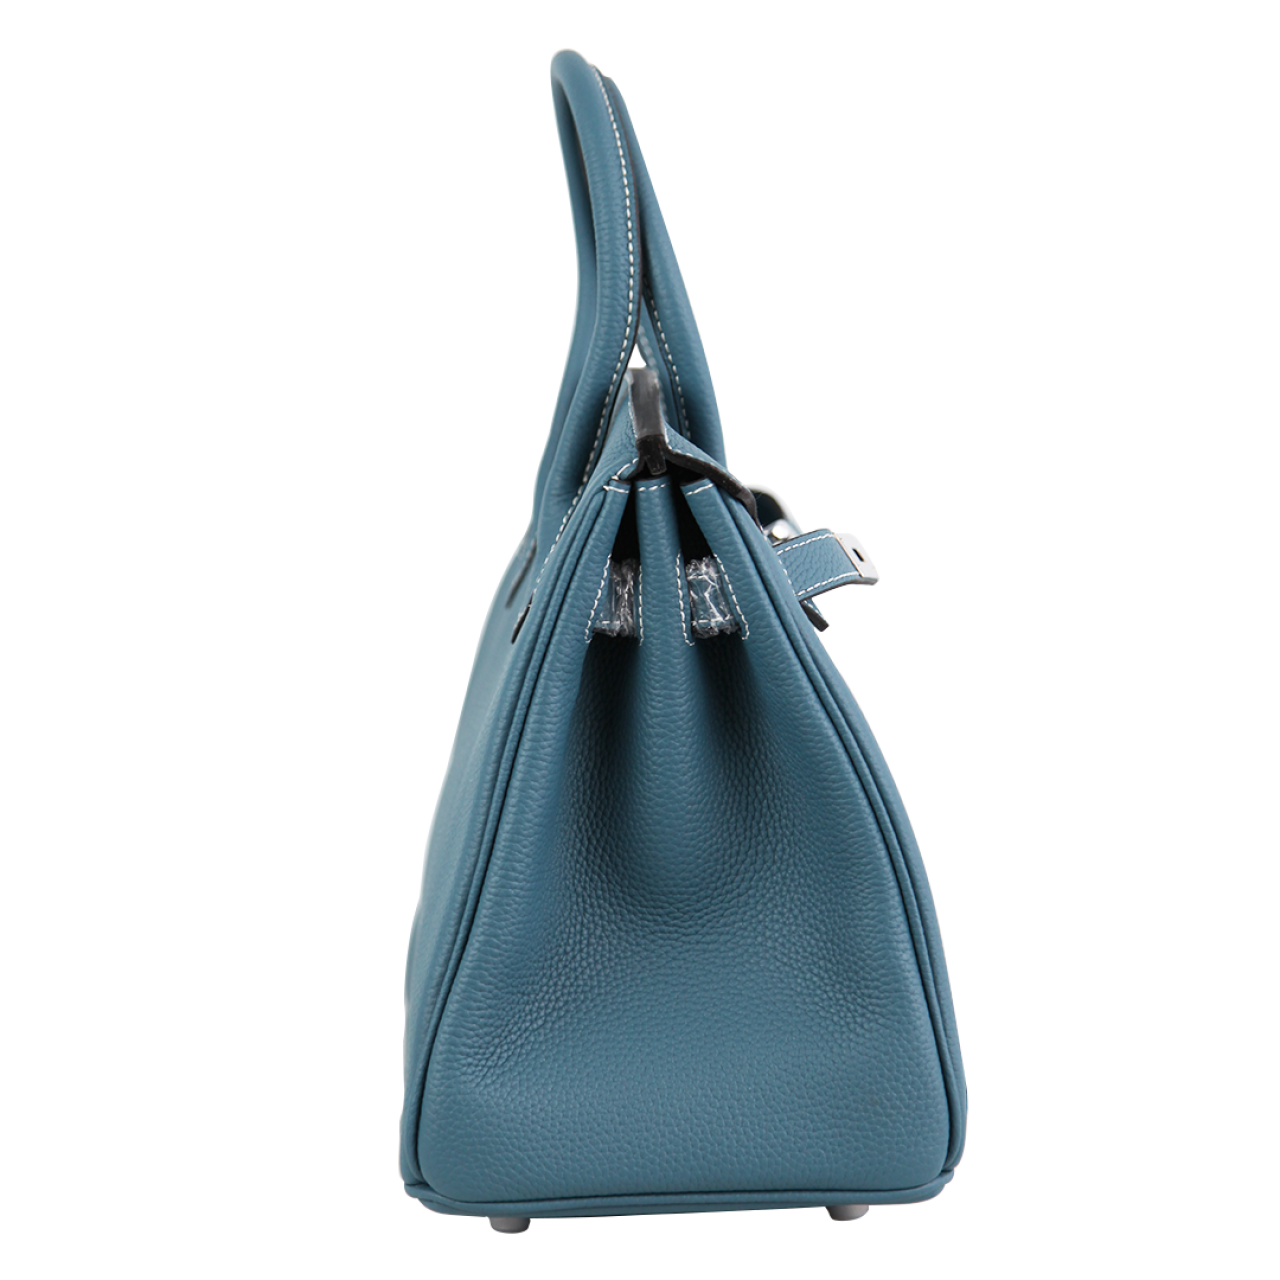 Zeekas Women Satchel Purse Silver Hardware Belted Top-handle PU Leather Blue Tote Shoulder Bag